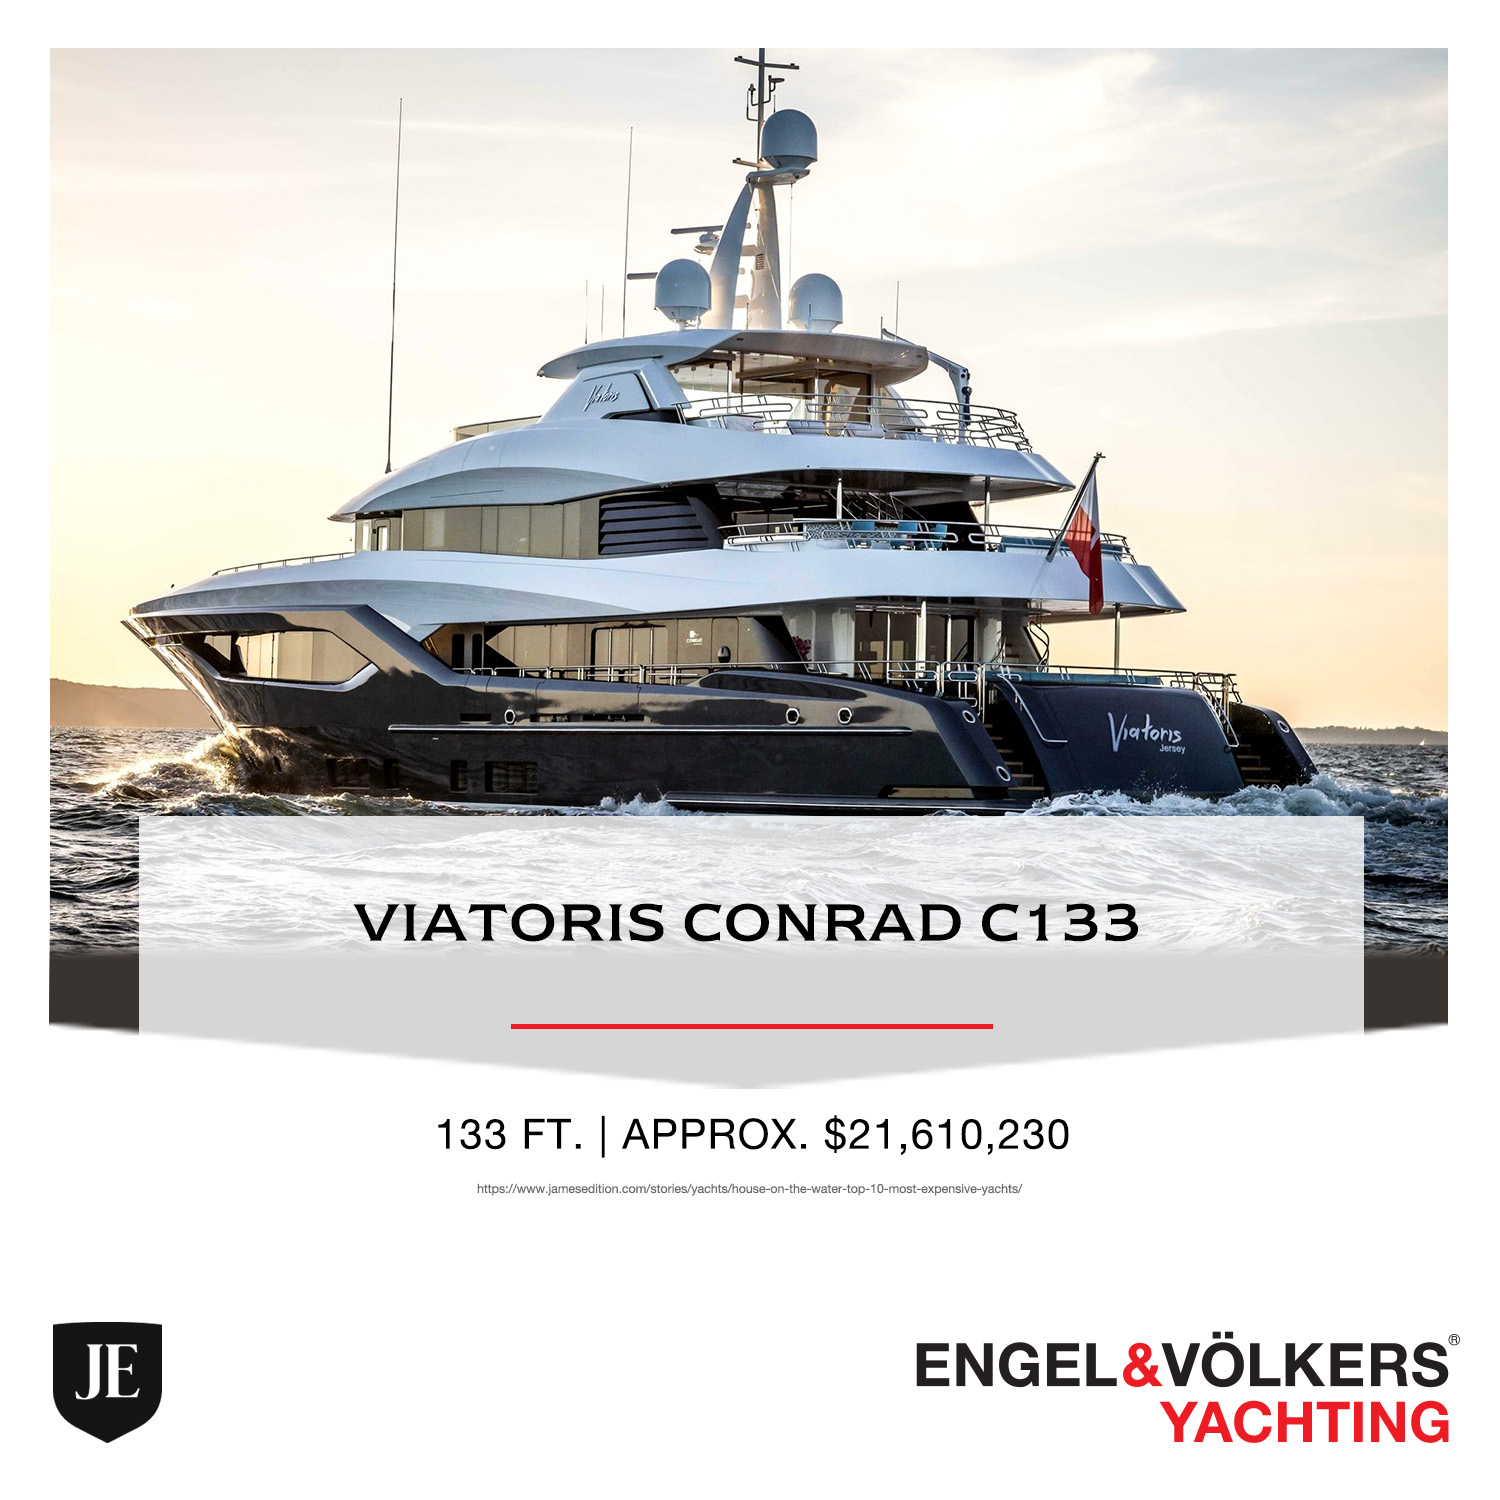 Viatoris Conrad C133 YACHT ENGEL & VOLKERS YACHTING